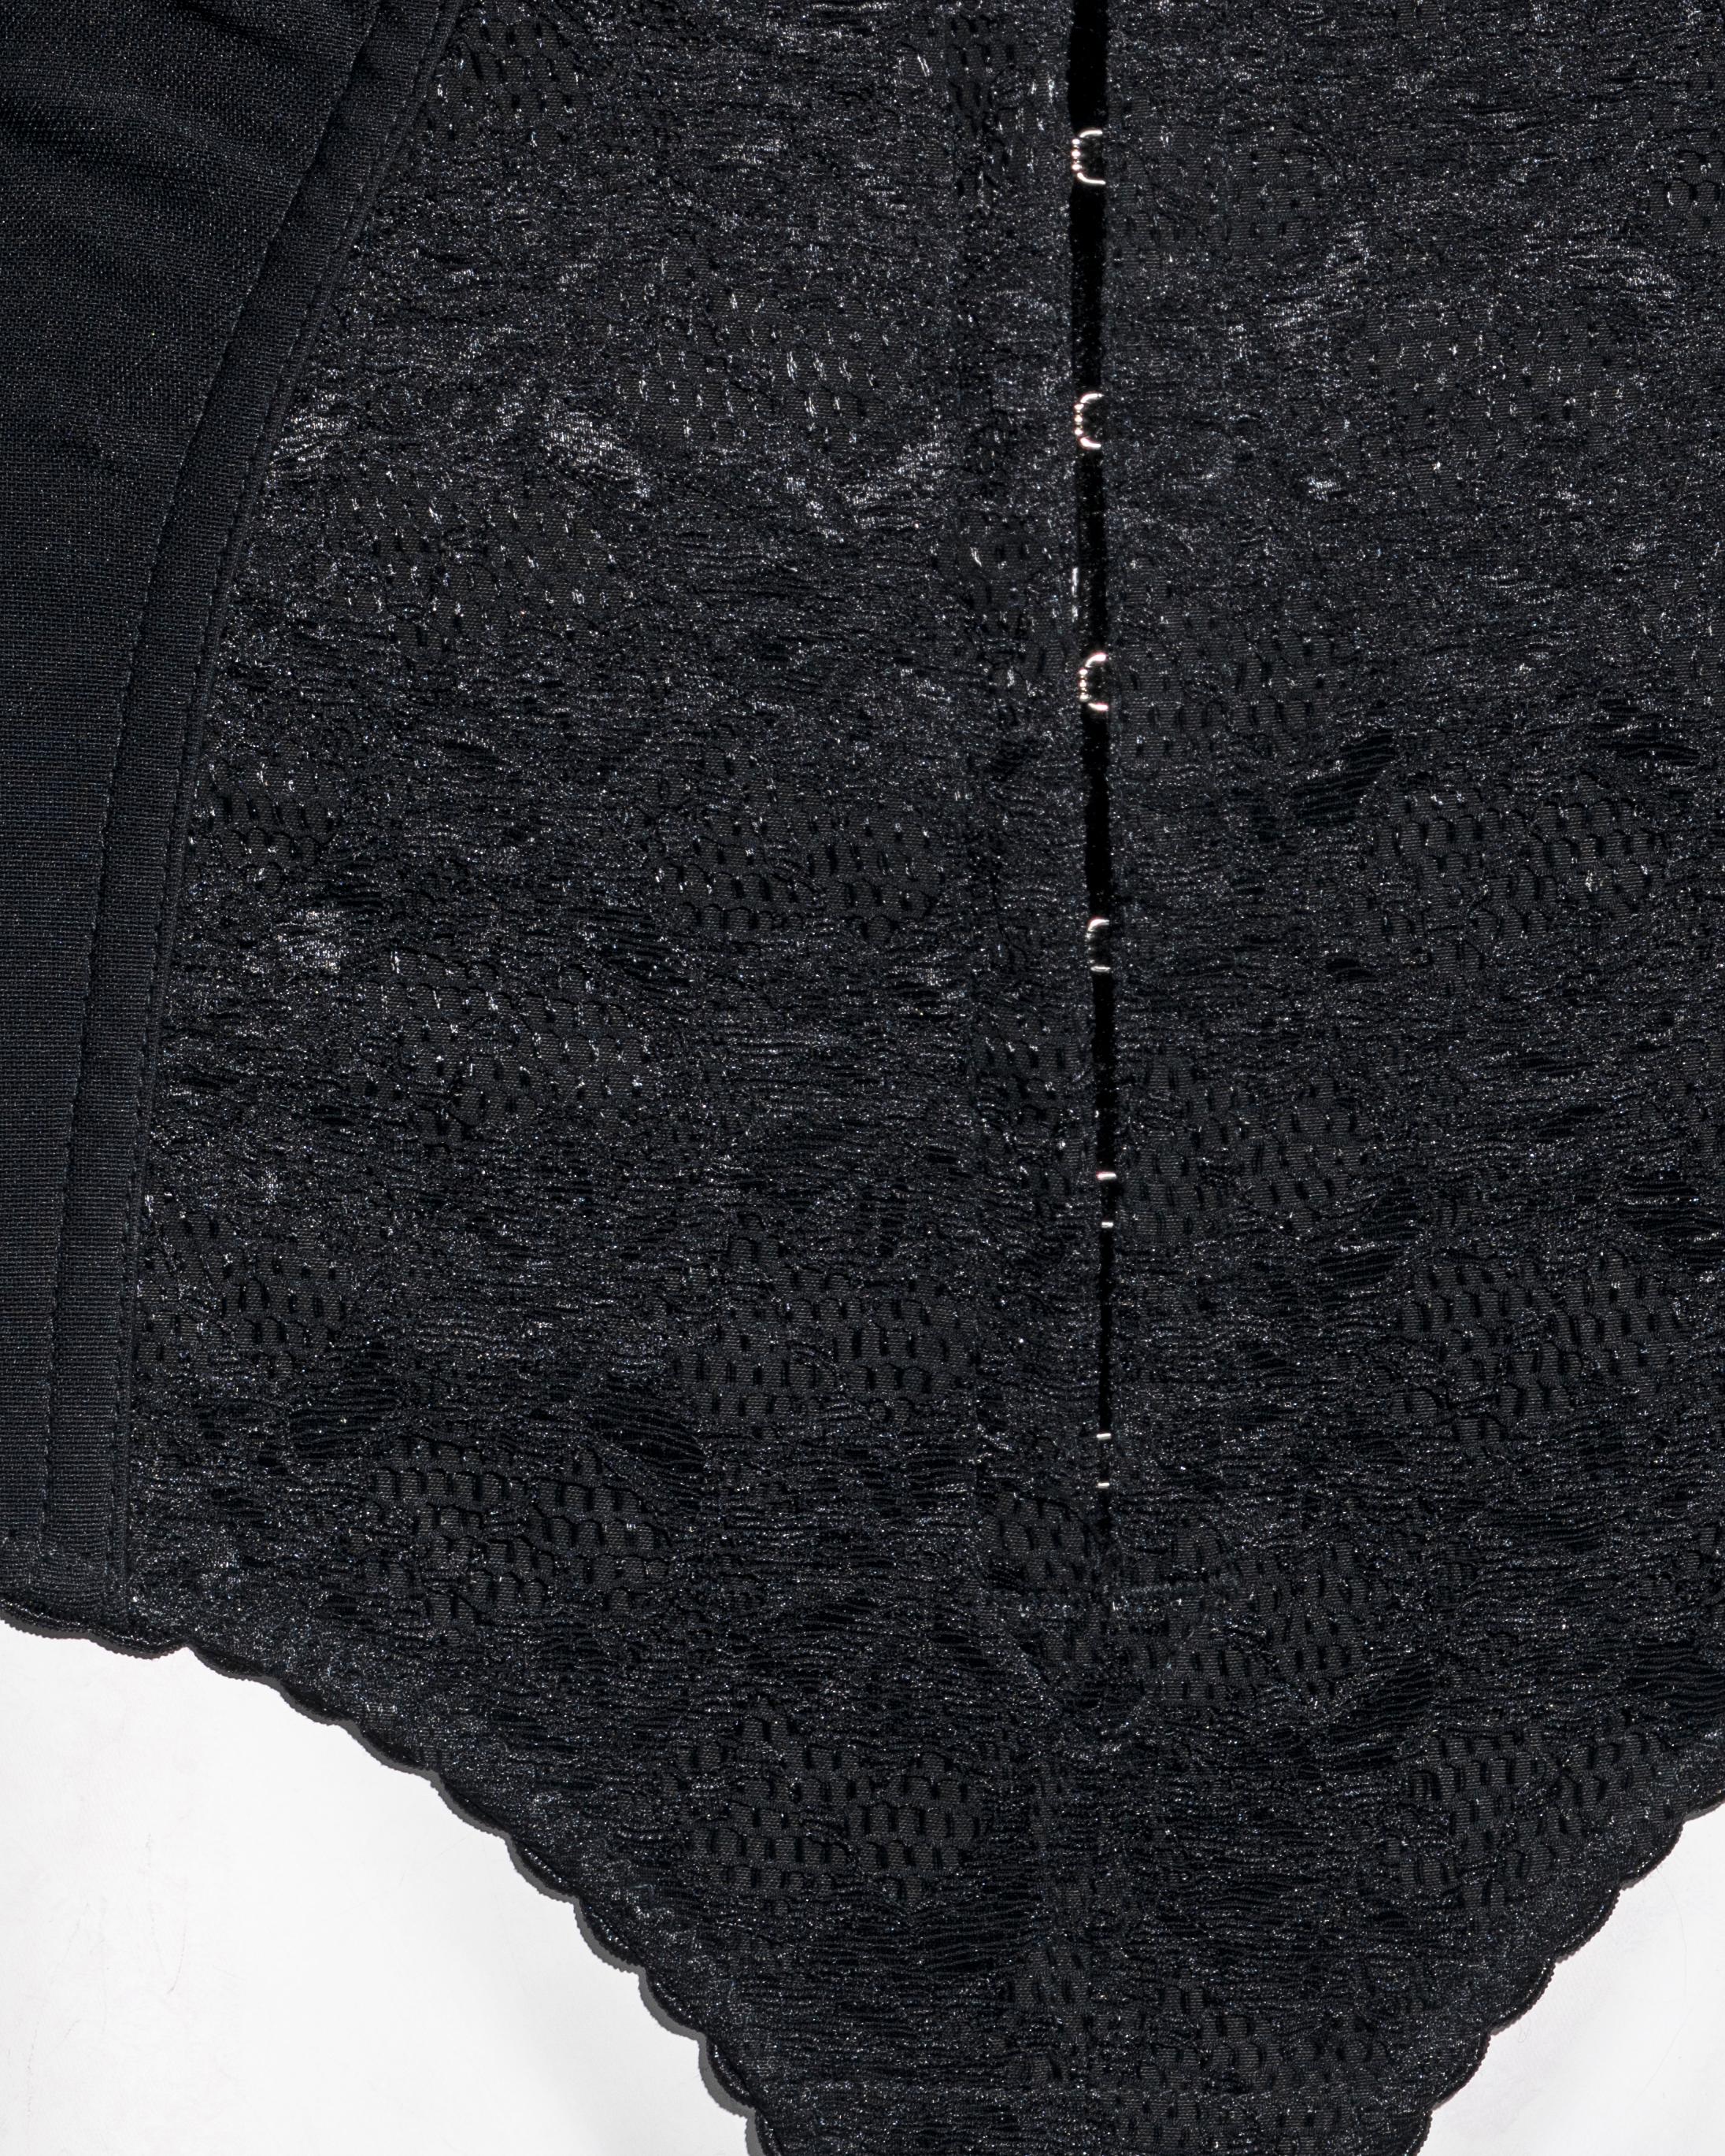 Dolce & Gabbana black mini wrap dress with built in corset bodysuit, fw 1997 1